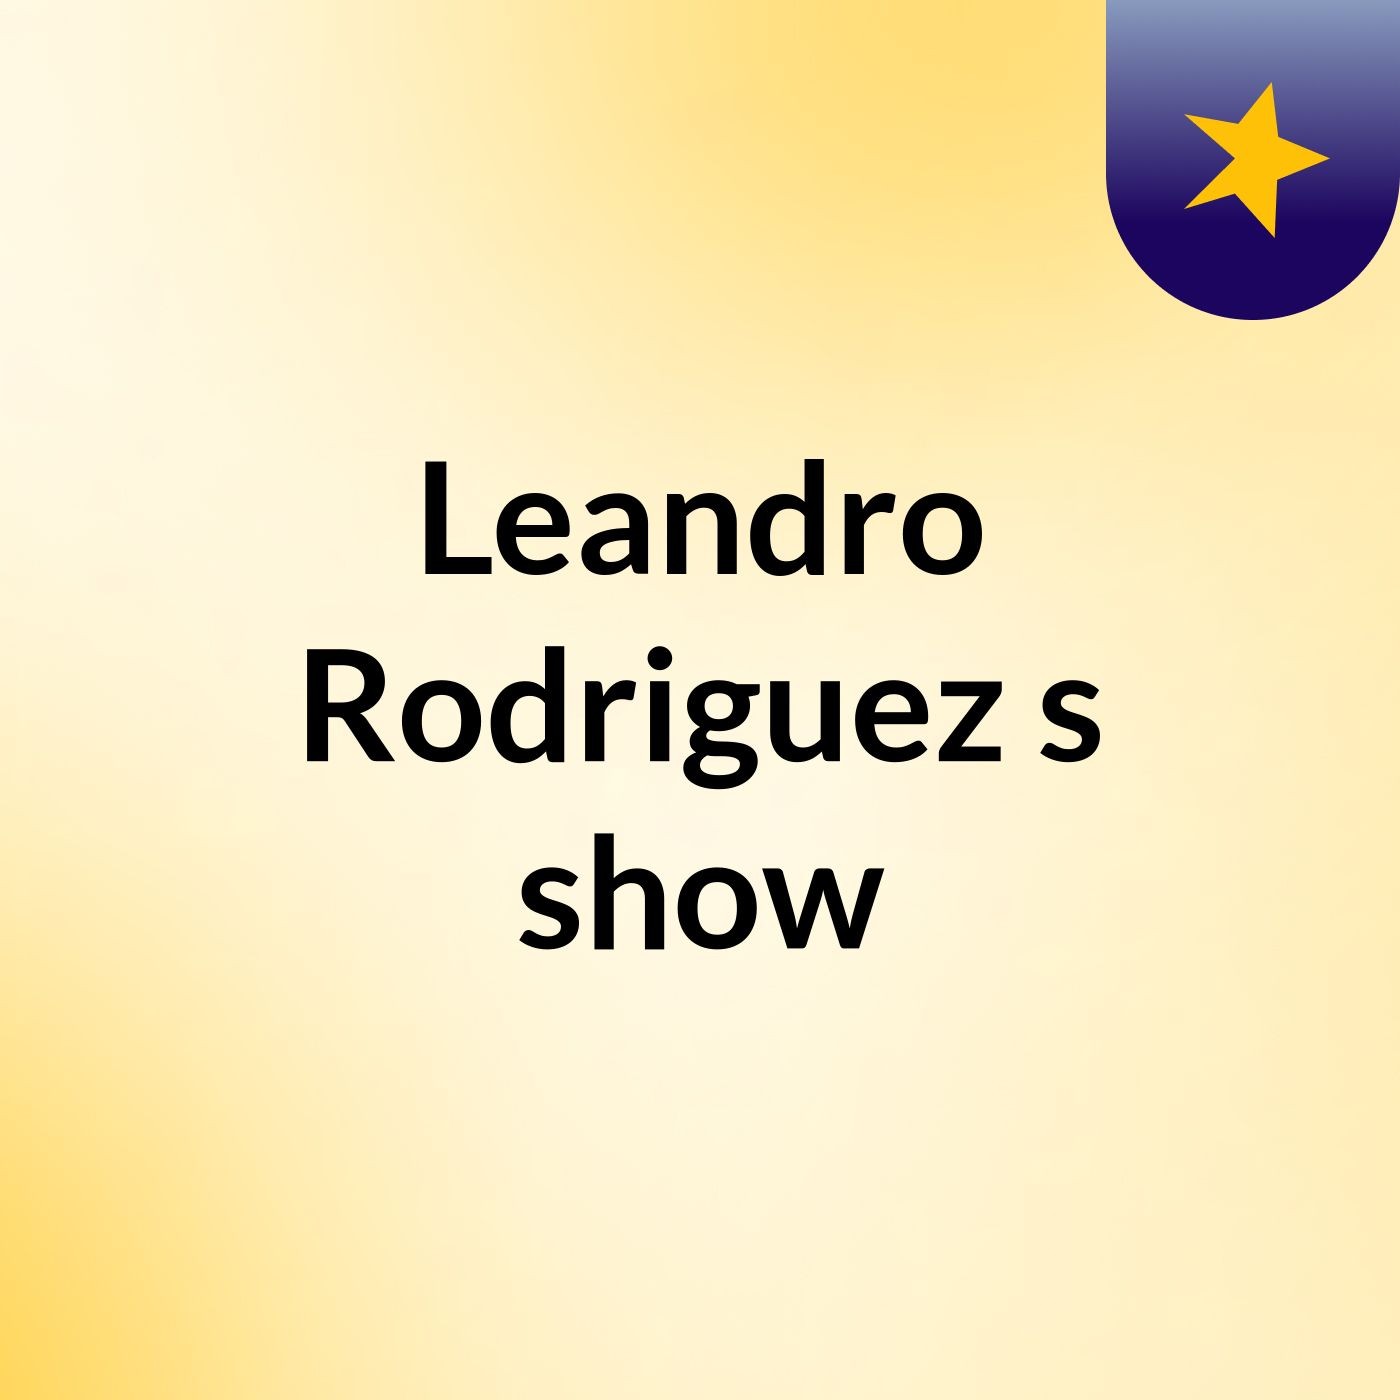 Leandro Rodriguez's show